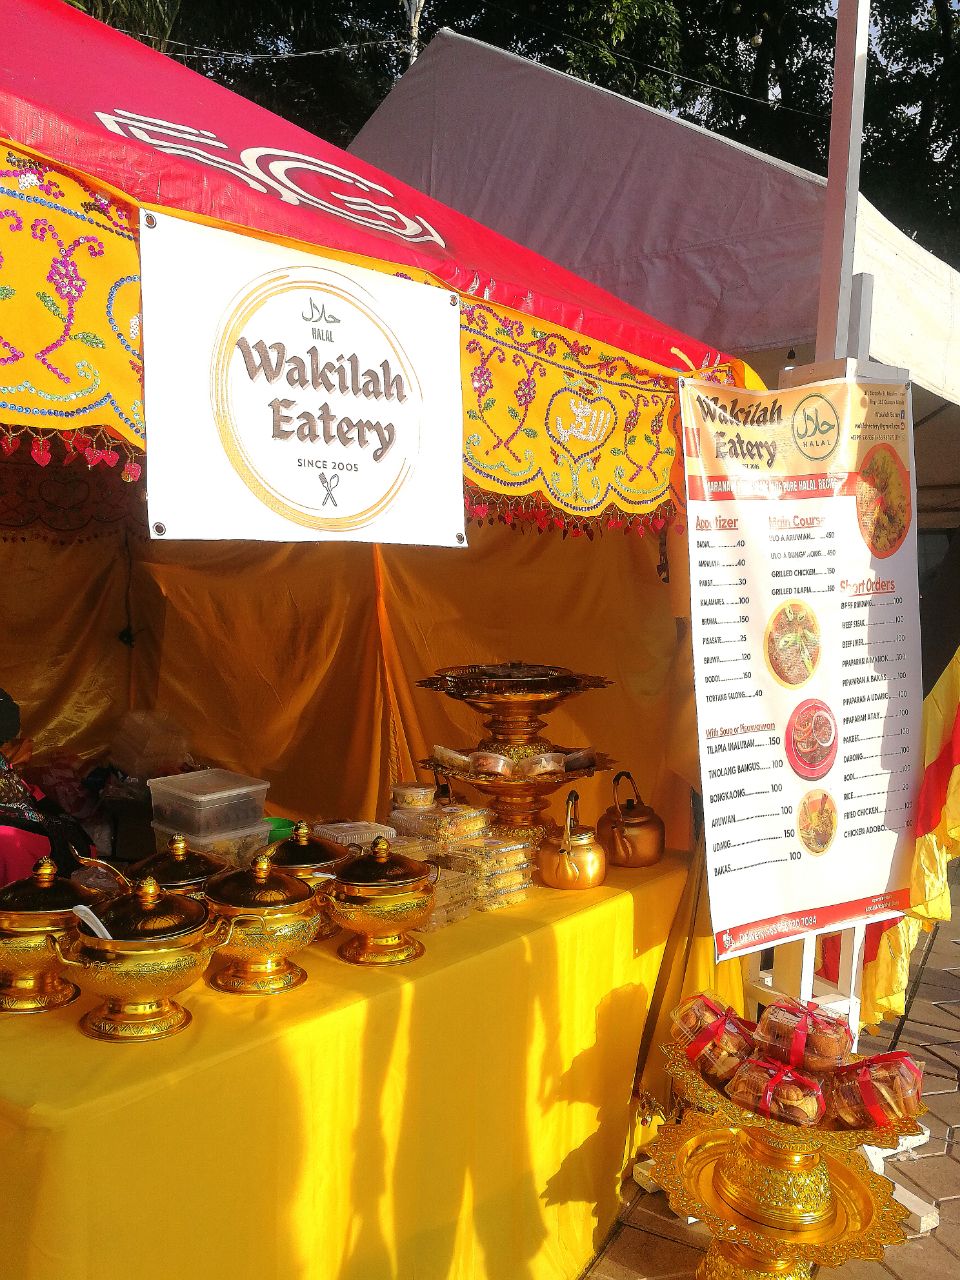 Manila Halal Food Festival 2023: A Flavorful Recap